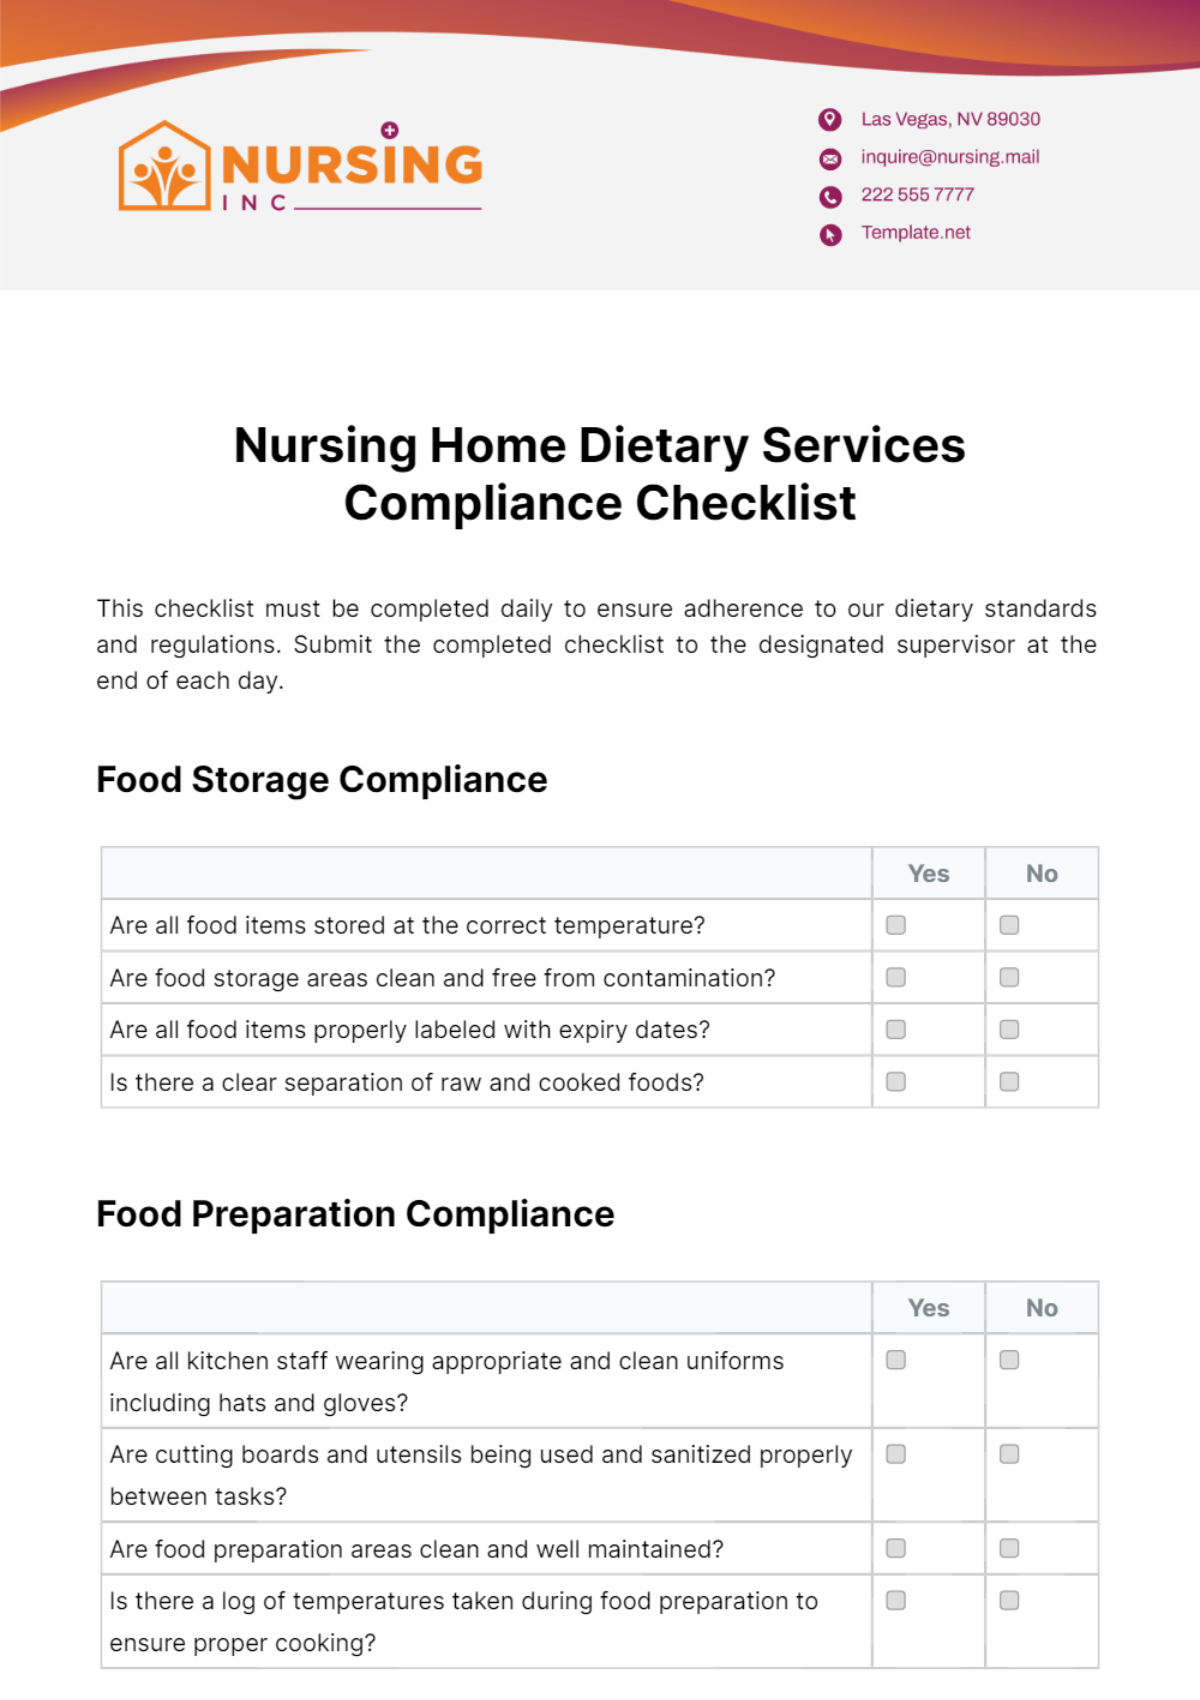 Nursing Home Dietary Services Compliance Checklist Template